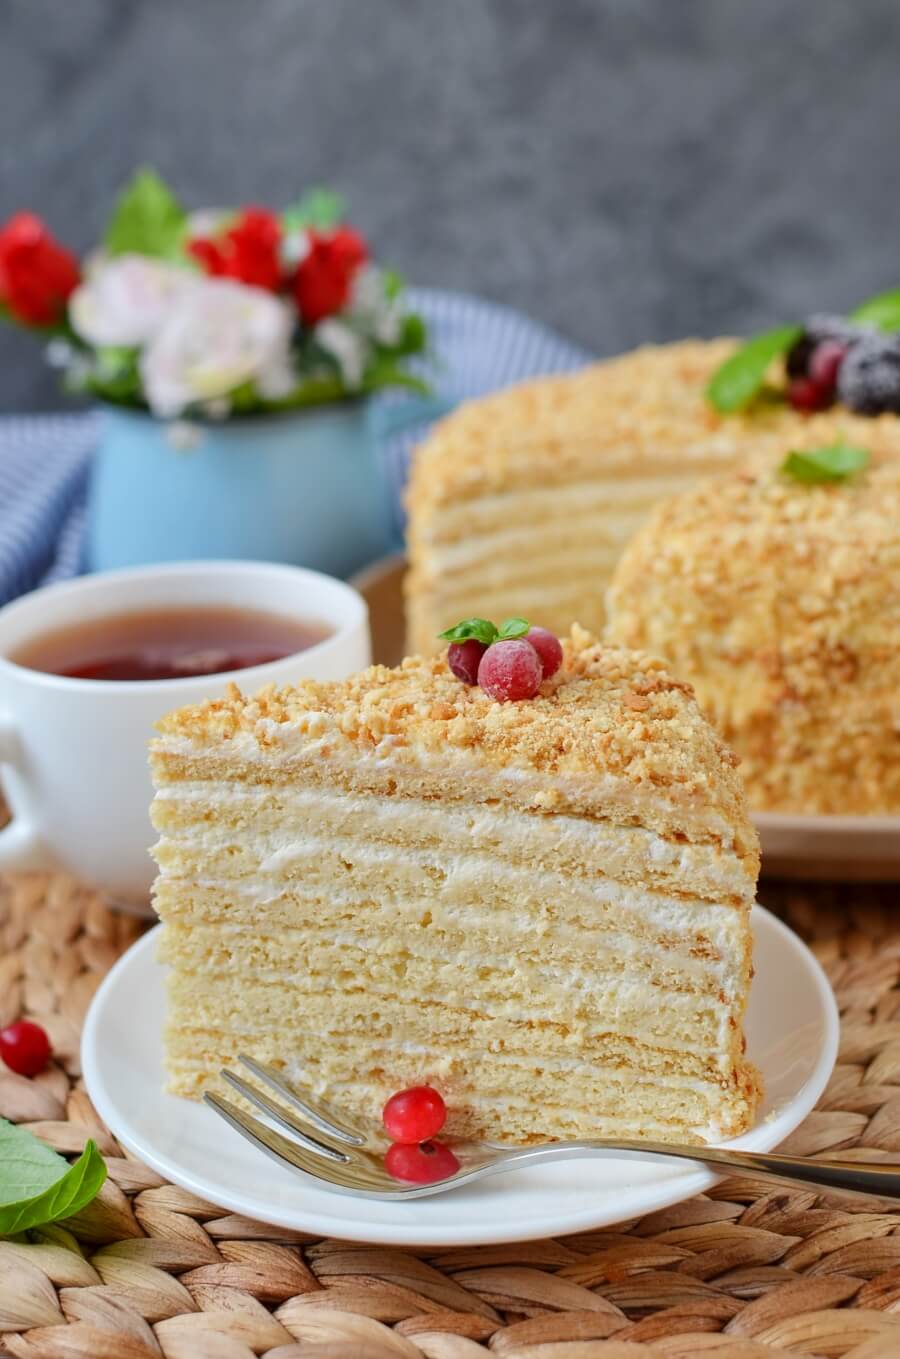 Chocolate Honey Cake (Spartak Cake) - Let the Baking Begin!